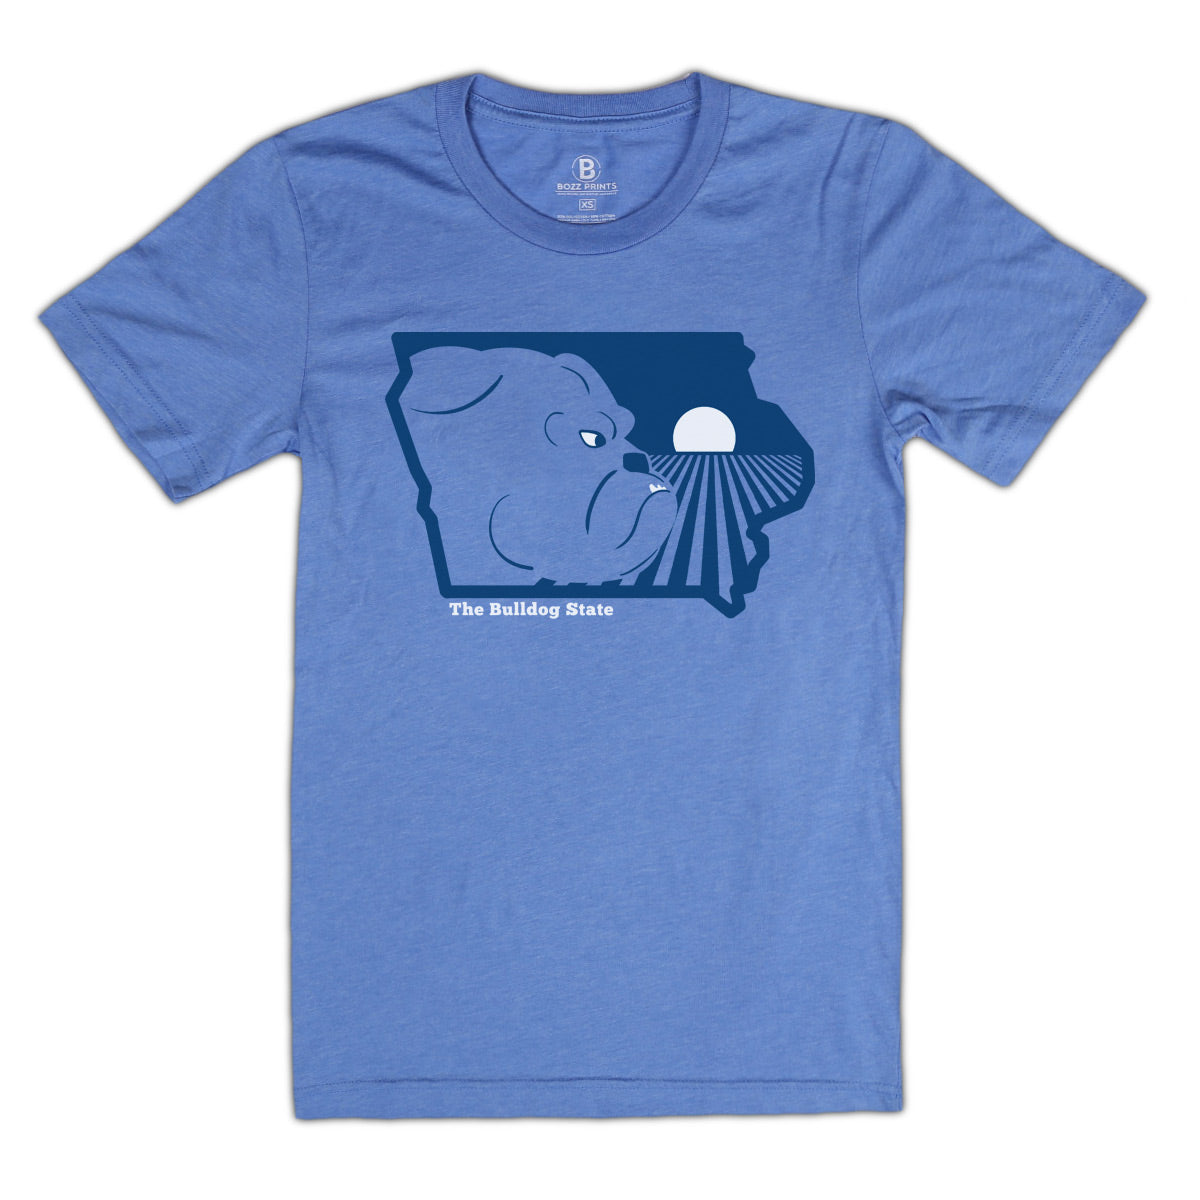 The Bulldog State T-Shirt - Bozz Prints